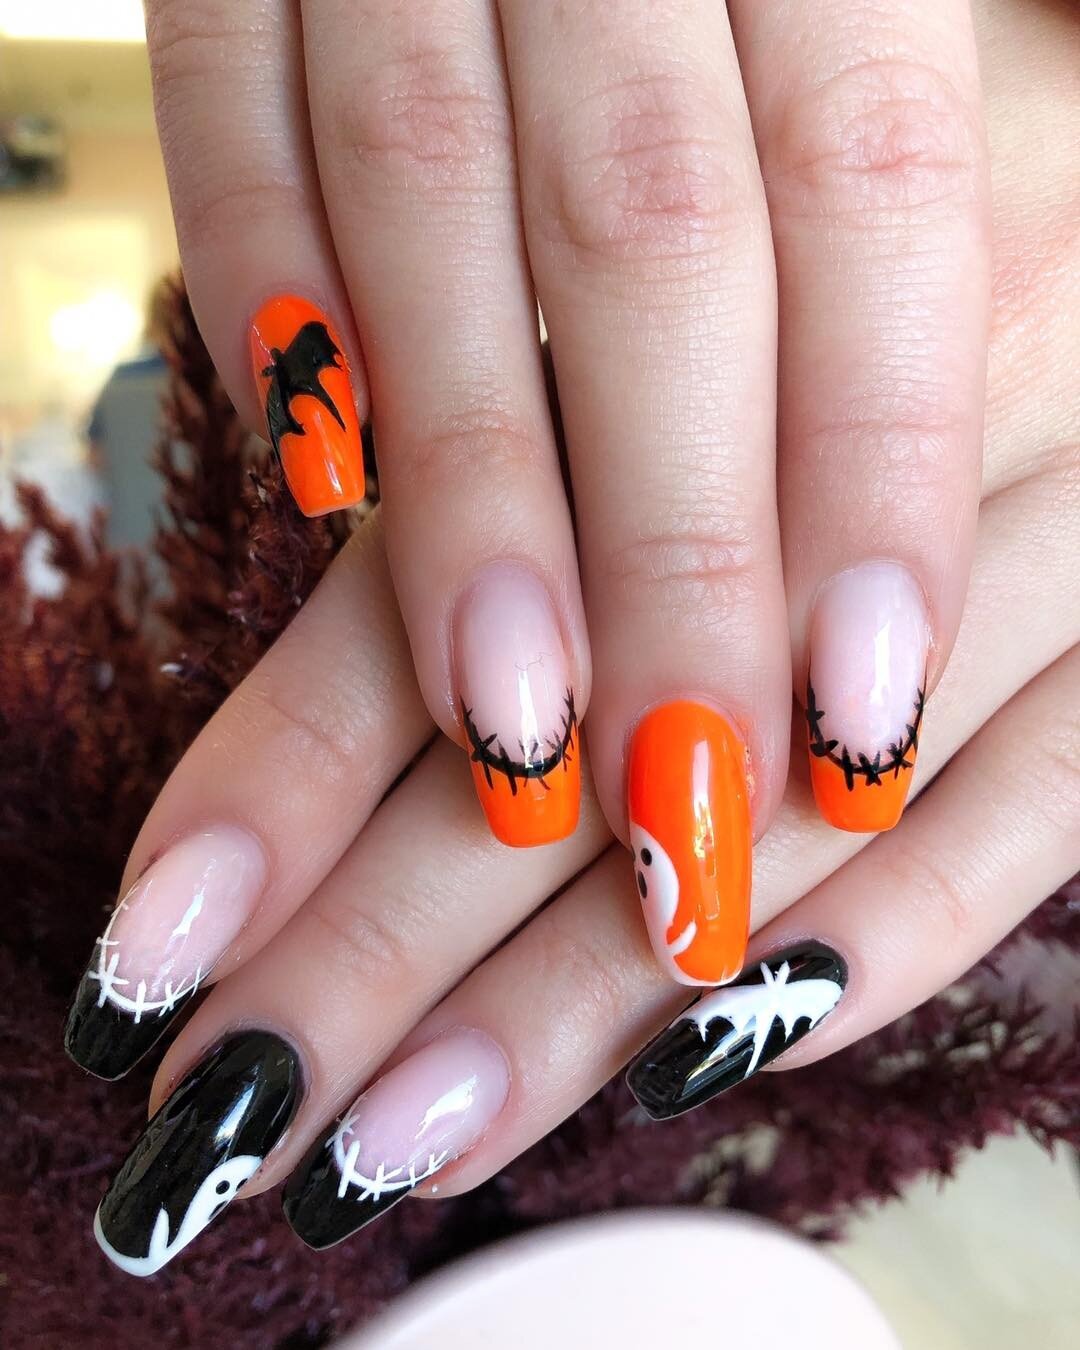 You got plans for Halloween? We have Halloween inspired nails all week 🎃

Manicure by Amy | Designs by Lissette 

#delawarenails #delawarenailtech #wilmingtondenails #hockessindenails #pikecreekde #pikecreekvalley #delawaretoday #christianamall #hoc